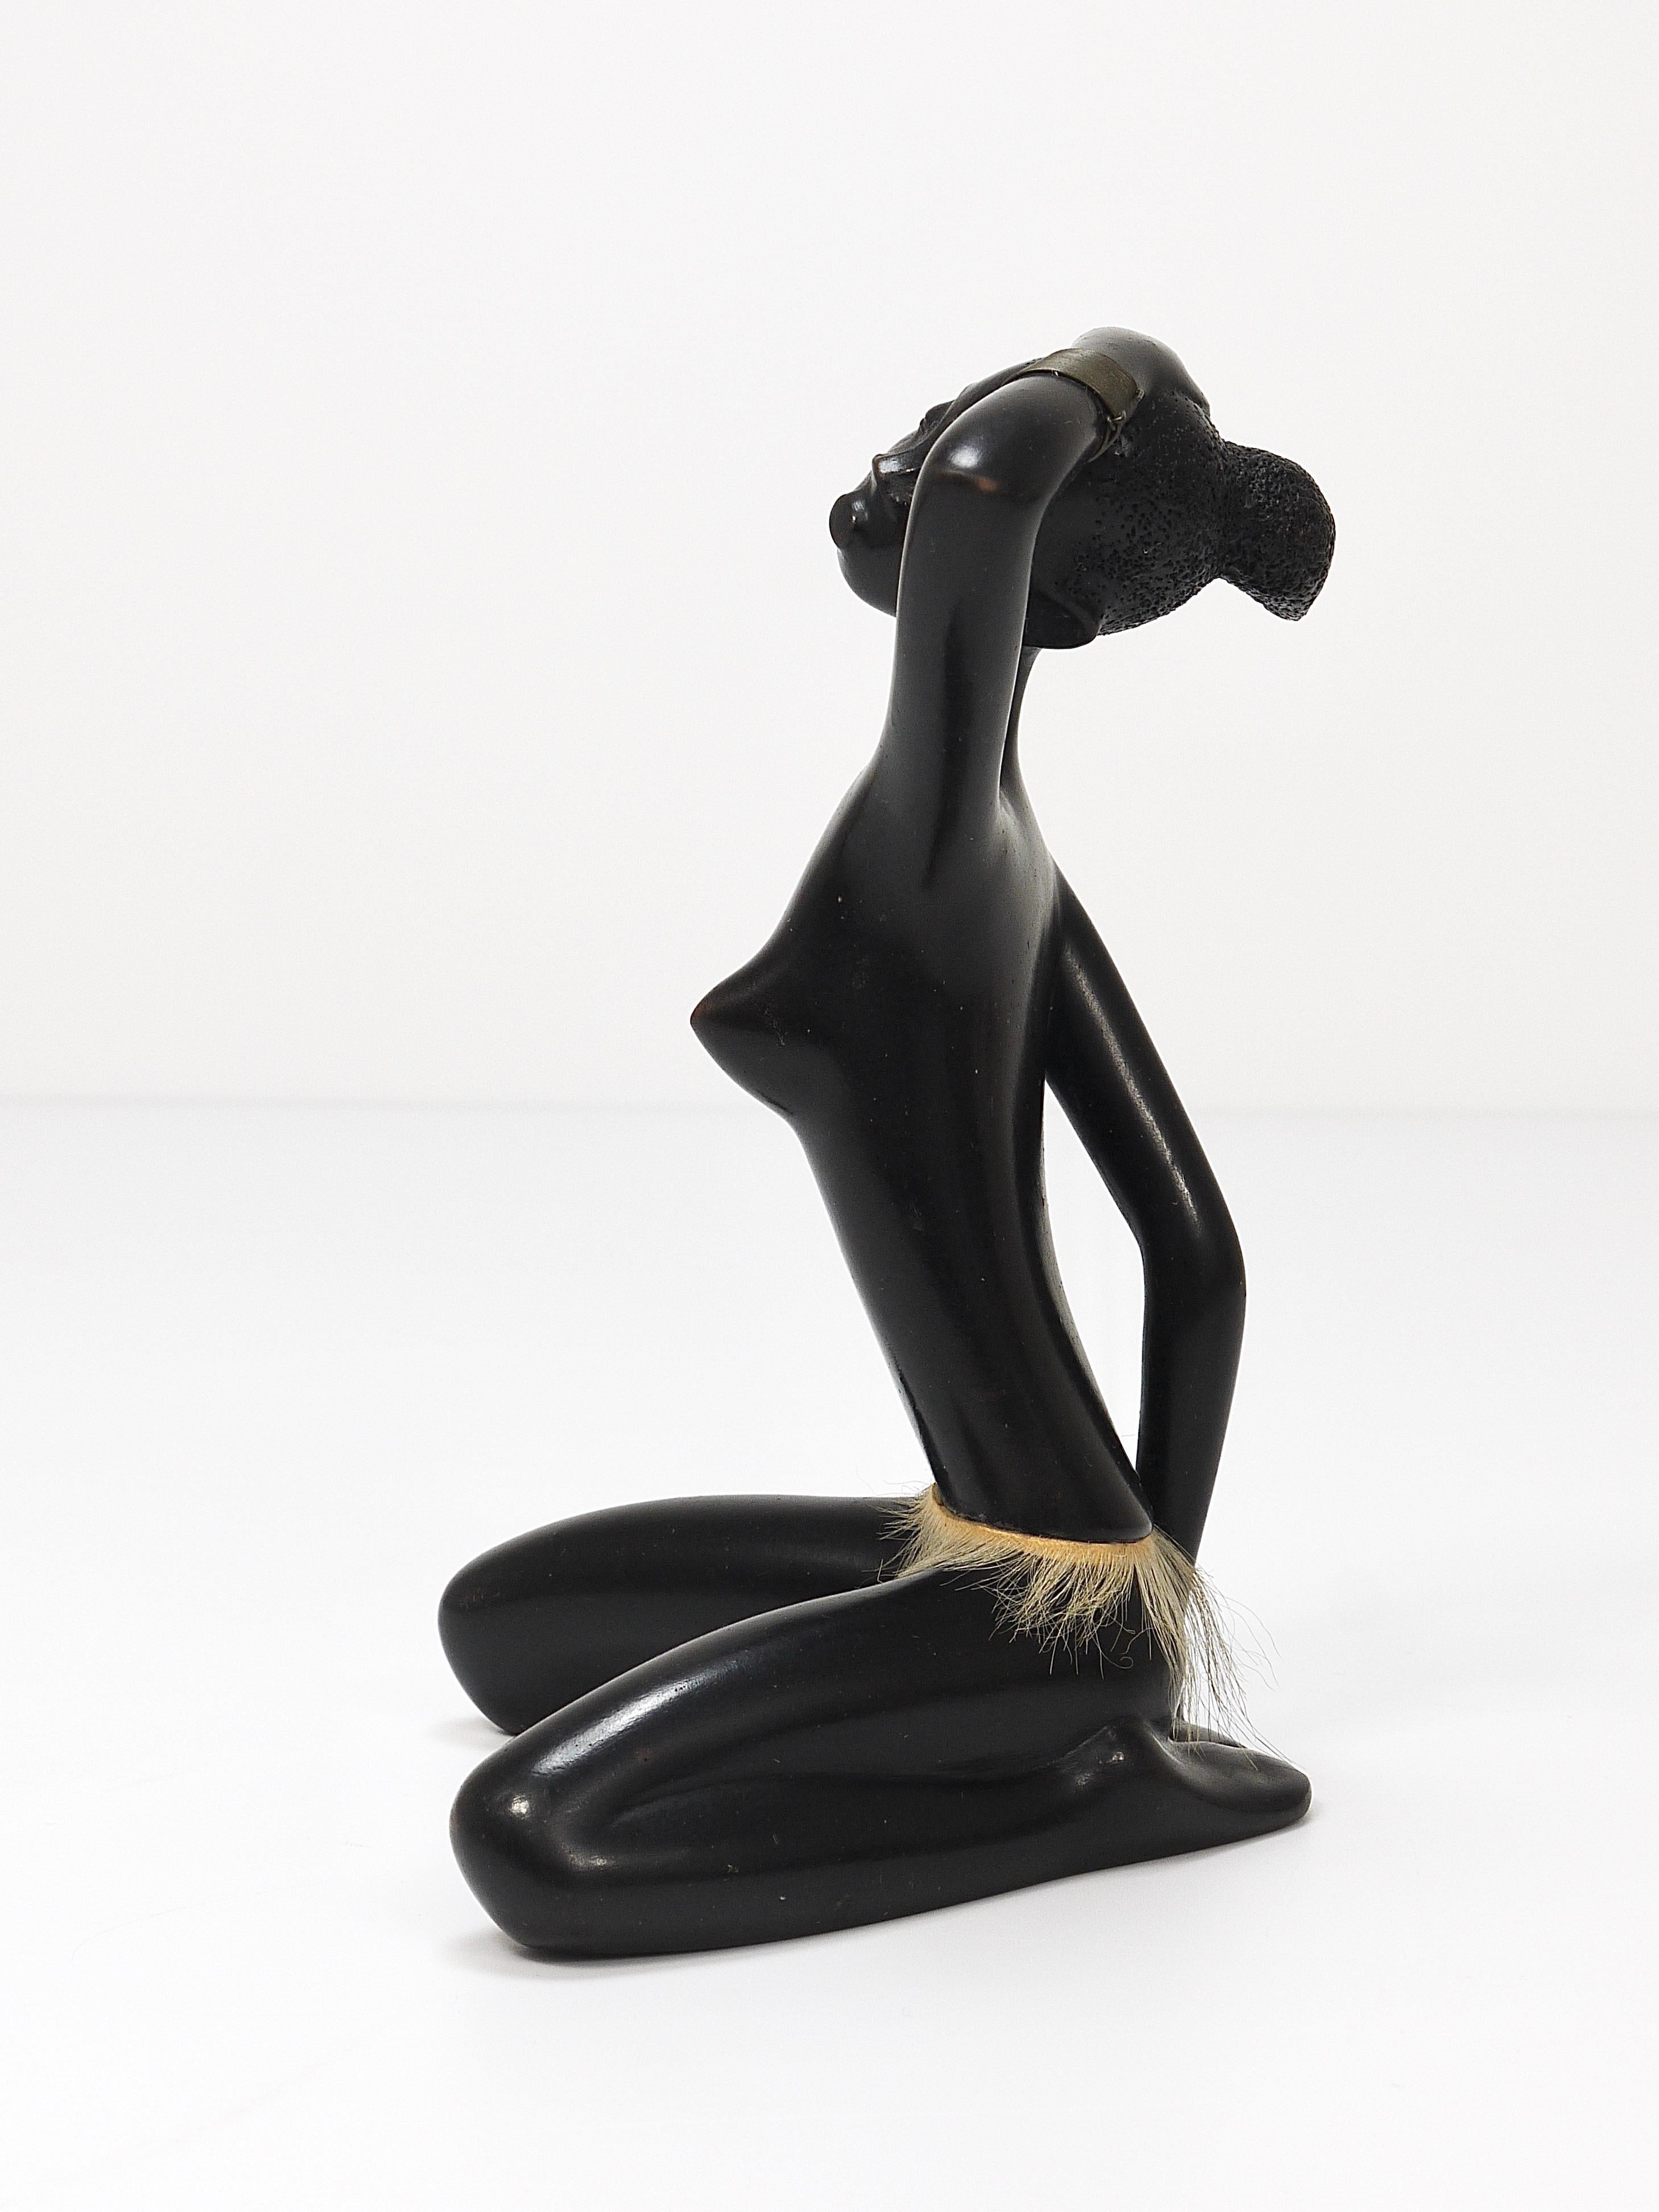 Brass African Woman Figurine Sculpture by Leopold Anzengruber, Vienna, Austria, 1950s For Sale